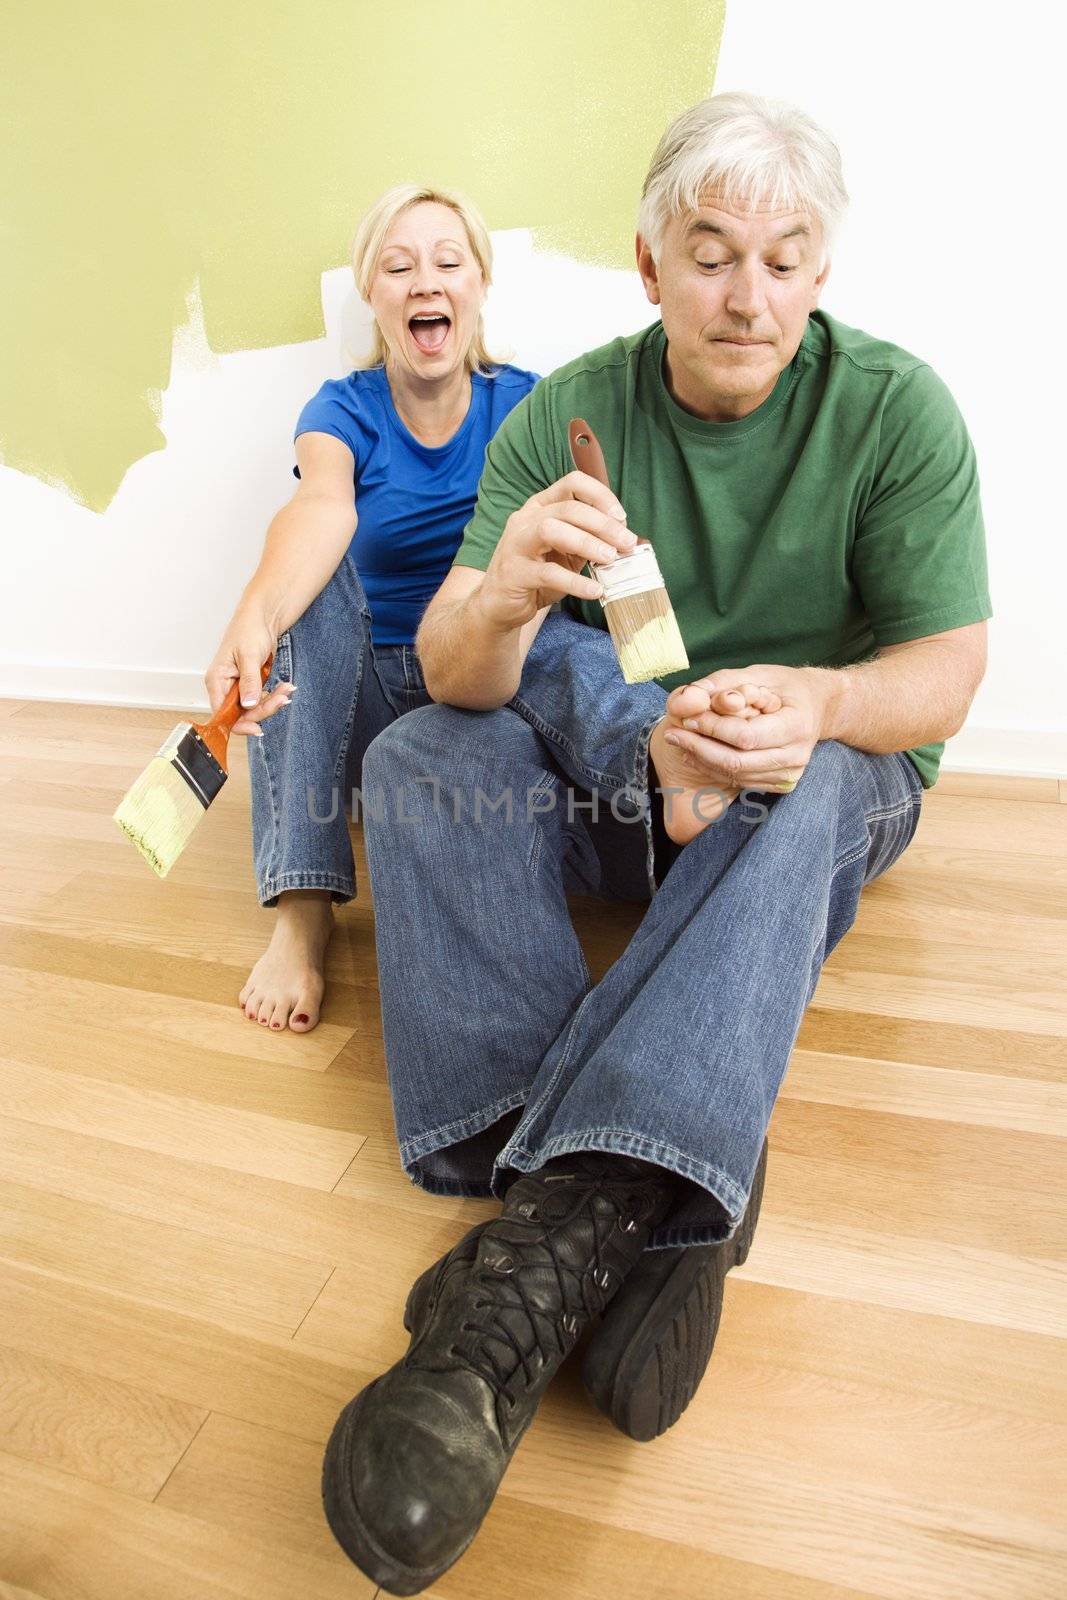 Man pretending to paint woman's toenails. by iofoto